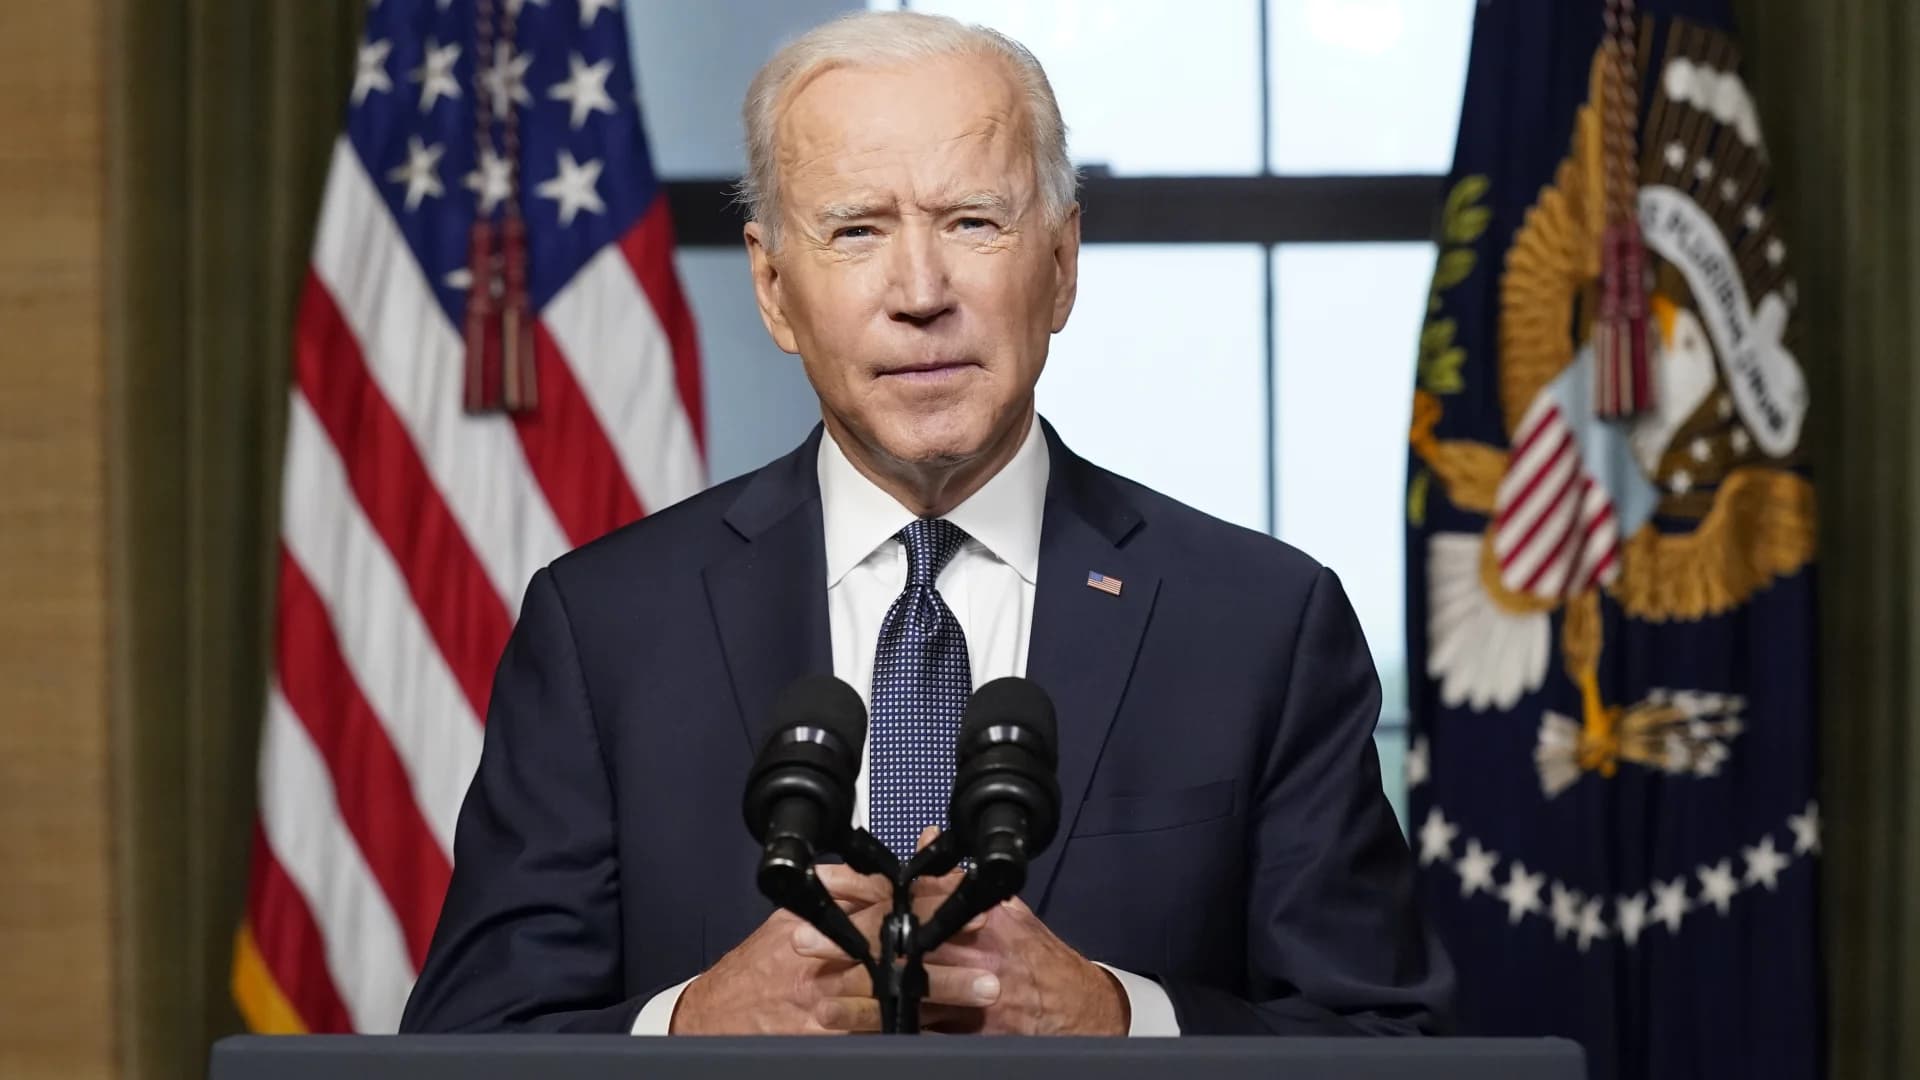 President Biden to pull troops from Afghanistan, end longest US war